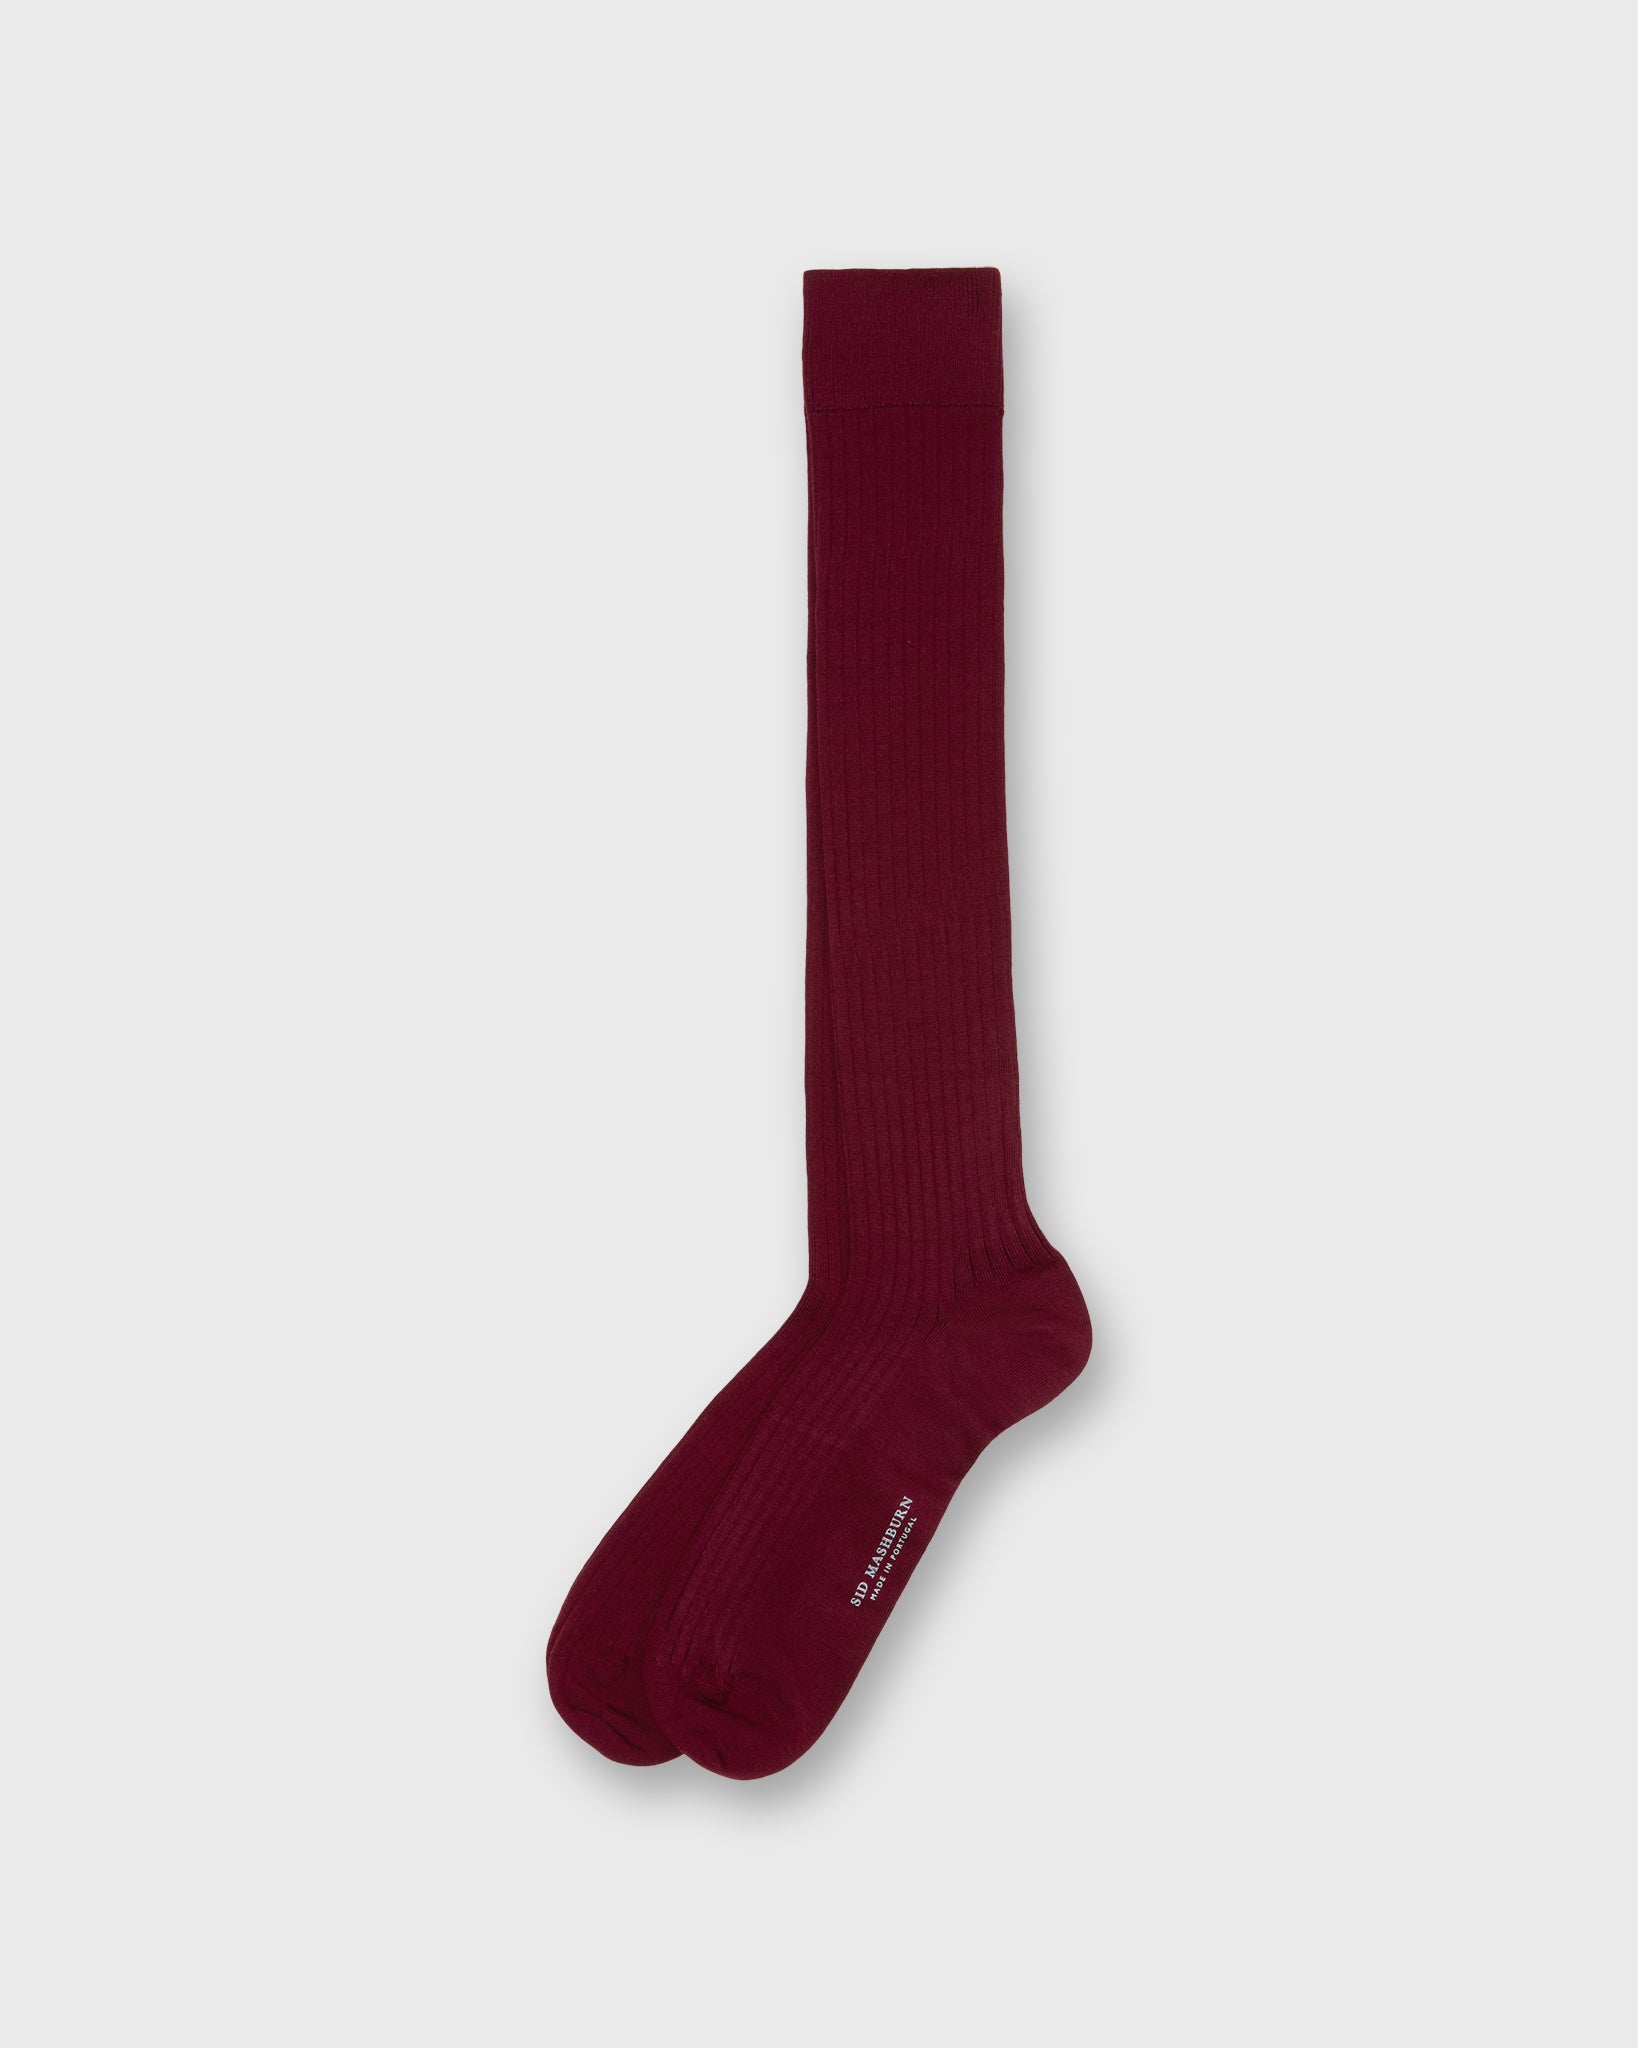 Over-The-Calf Dress Socks in Bordeaux Extra Fine Merino